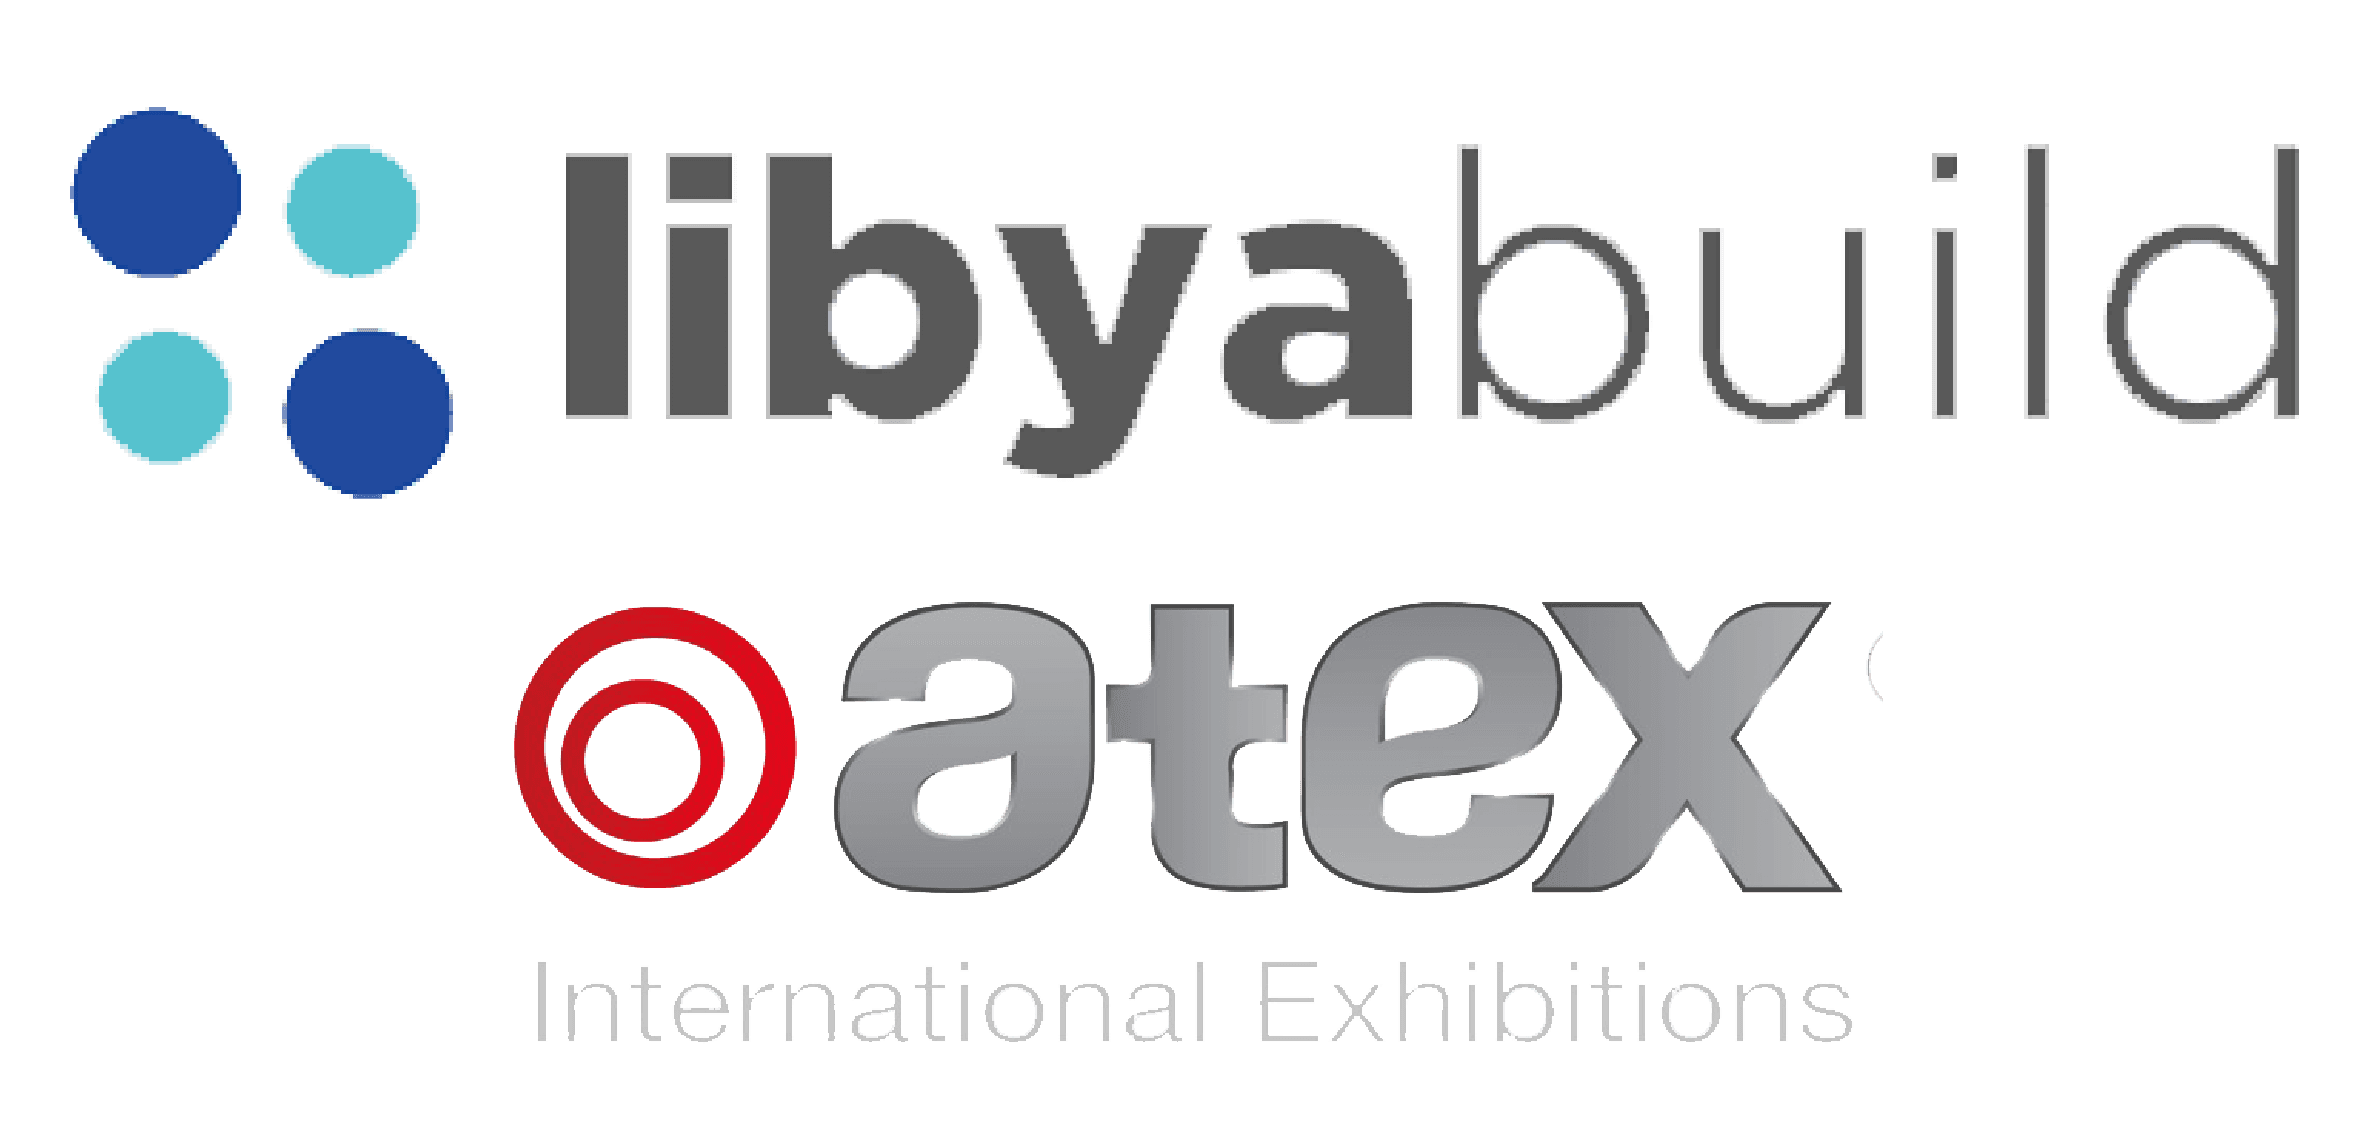 Libya Build - ATEX International Exhibitions